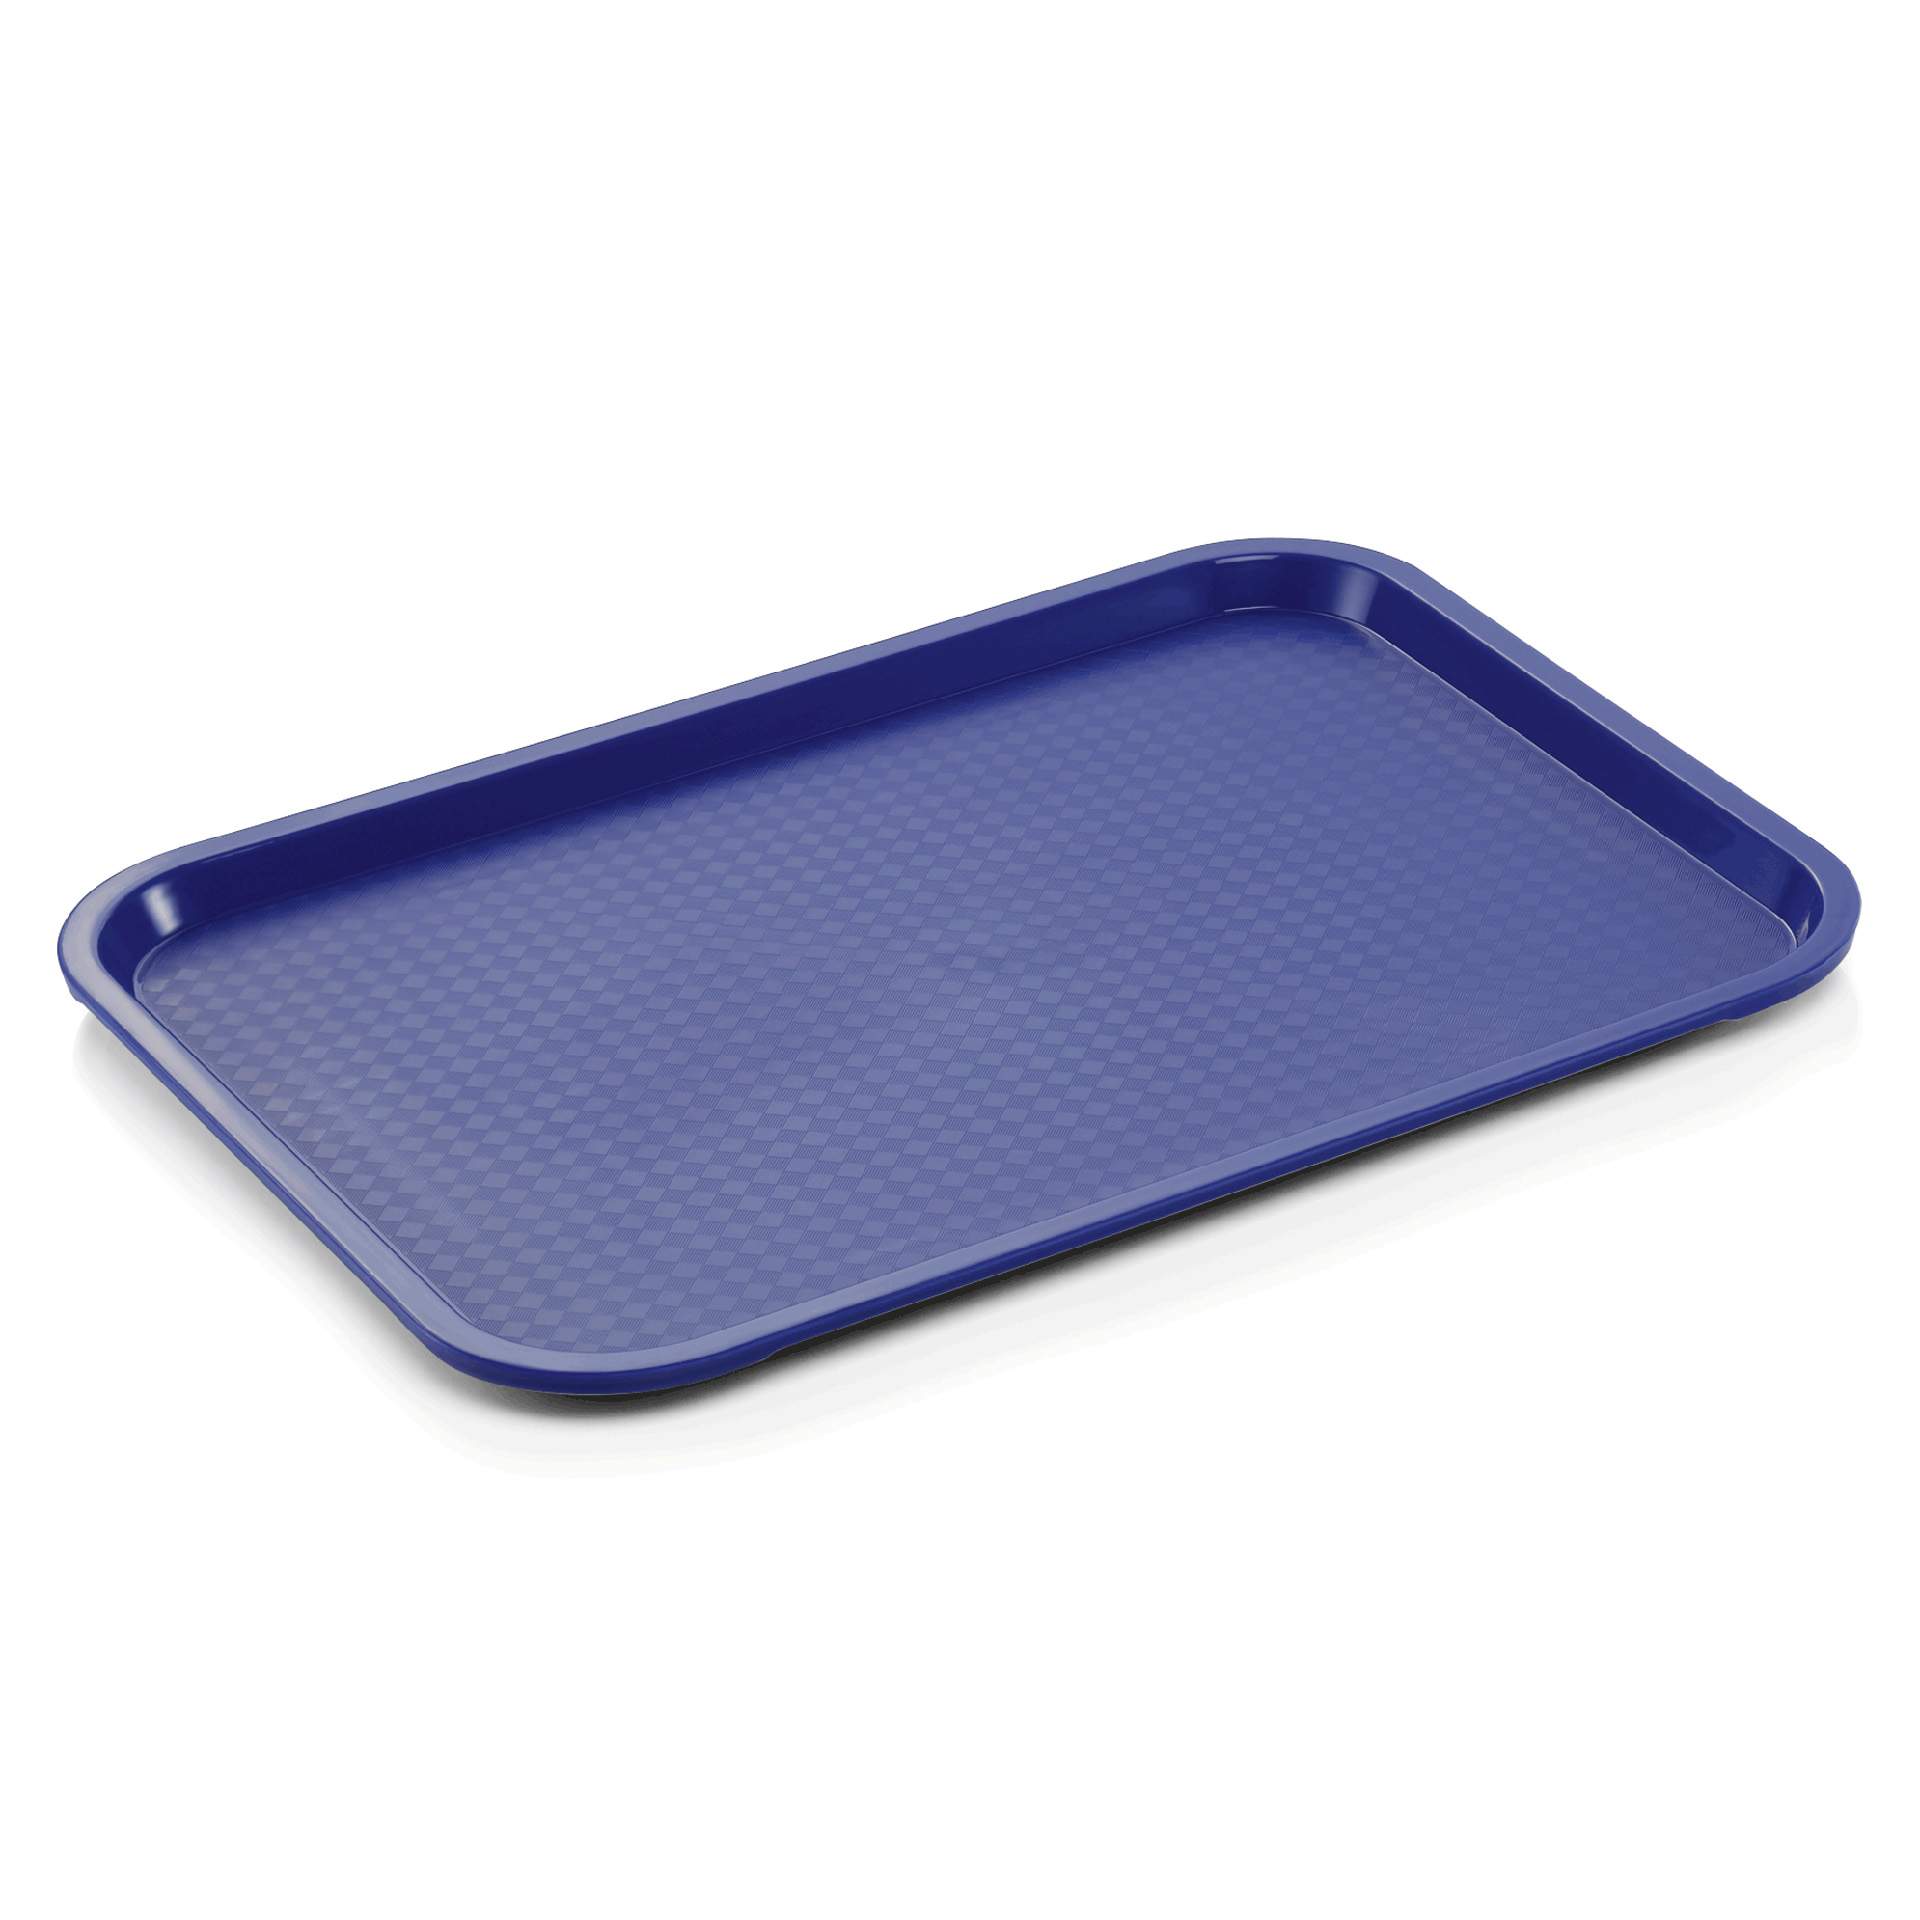 Tablett - Stapelnocken - Serie 9220 - dunkelblau - Abm. 41,5 x 31,0 cm - Polypropylen - premium Qualität - 9221415-A